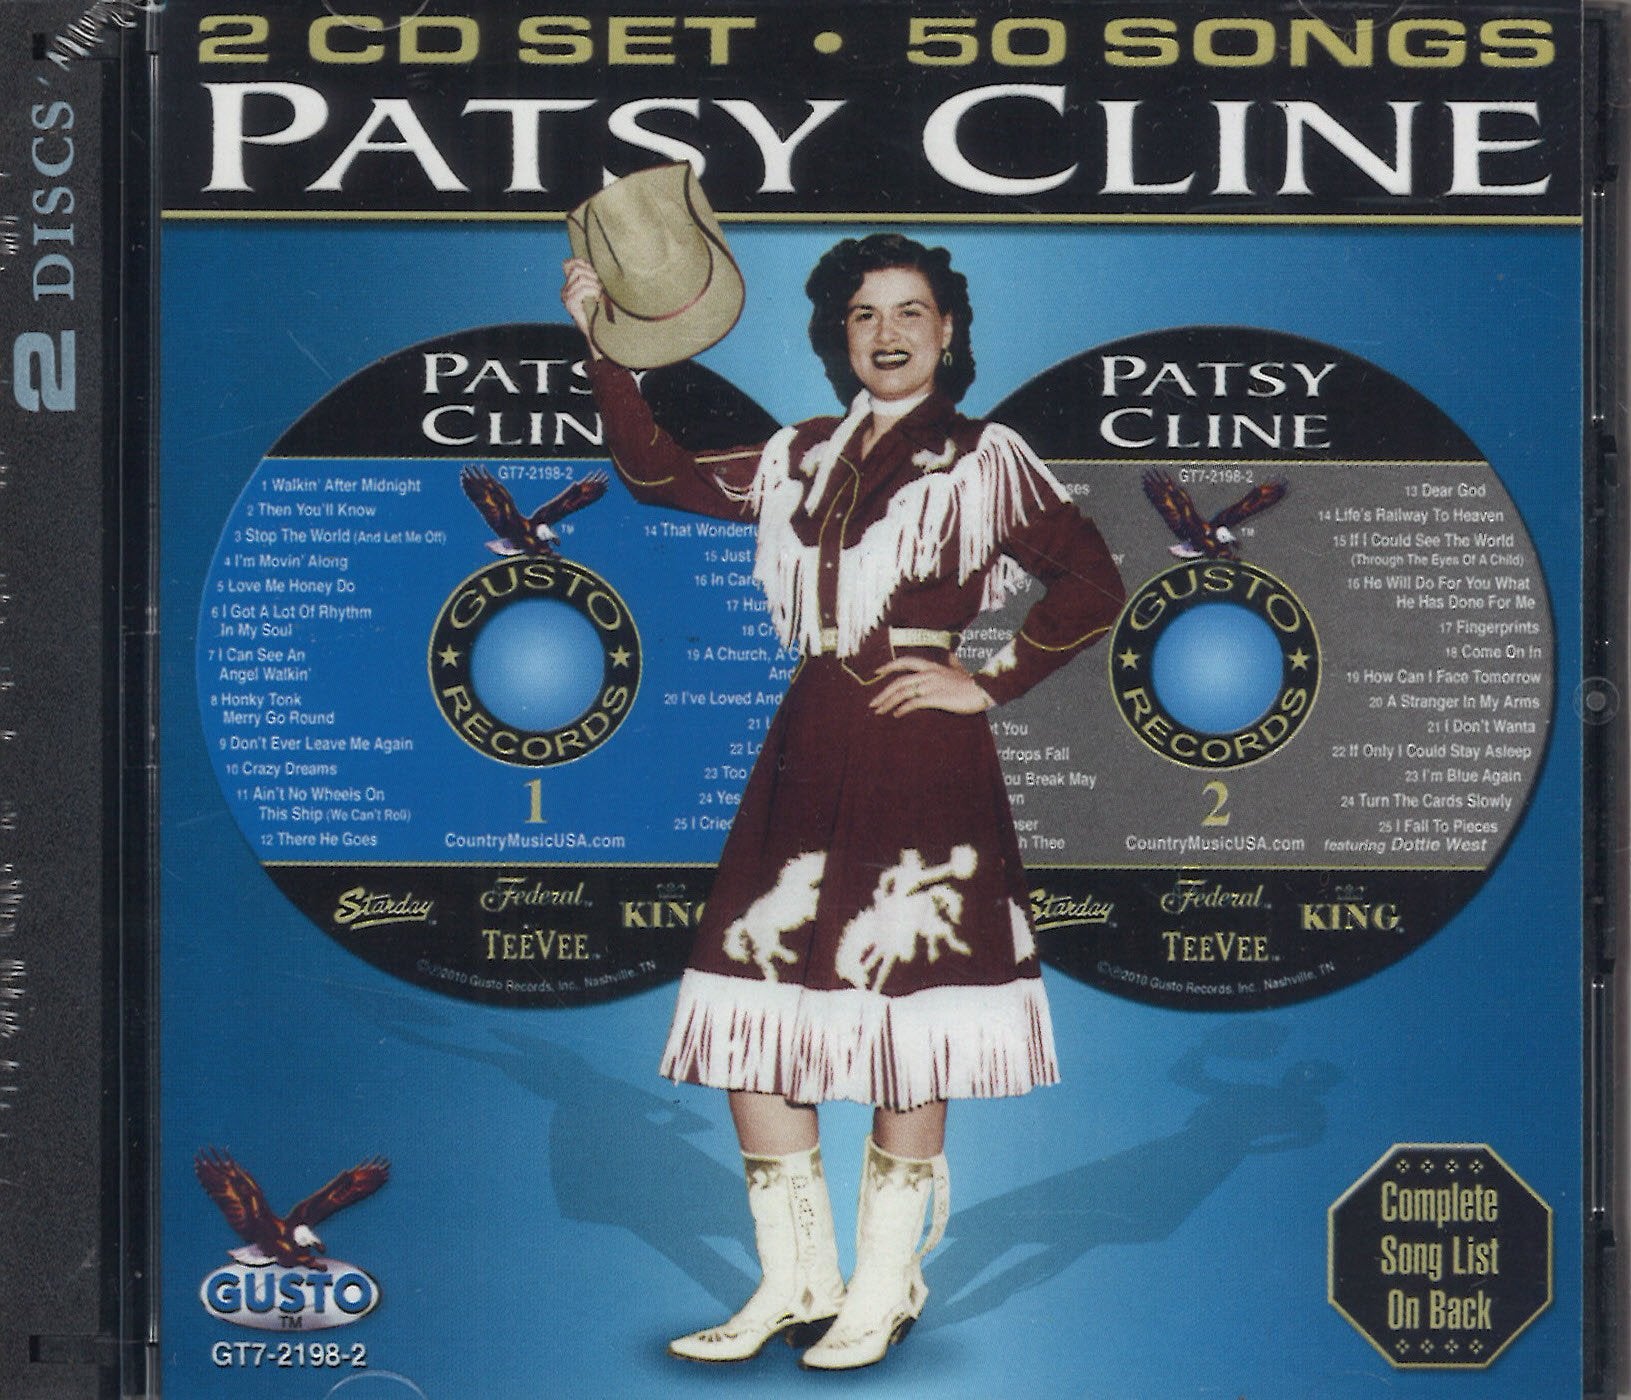 Patsy Cline: 2 CD Set